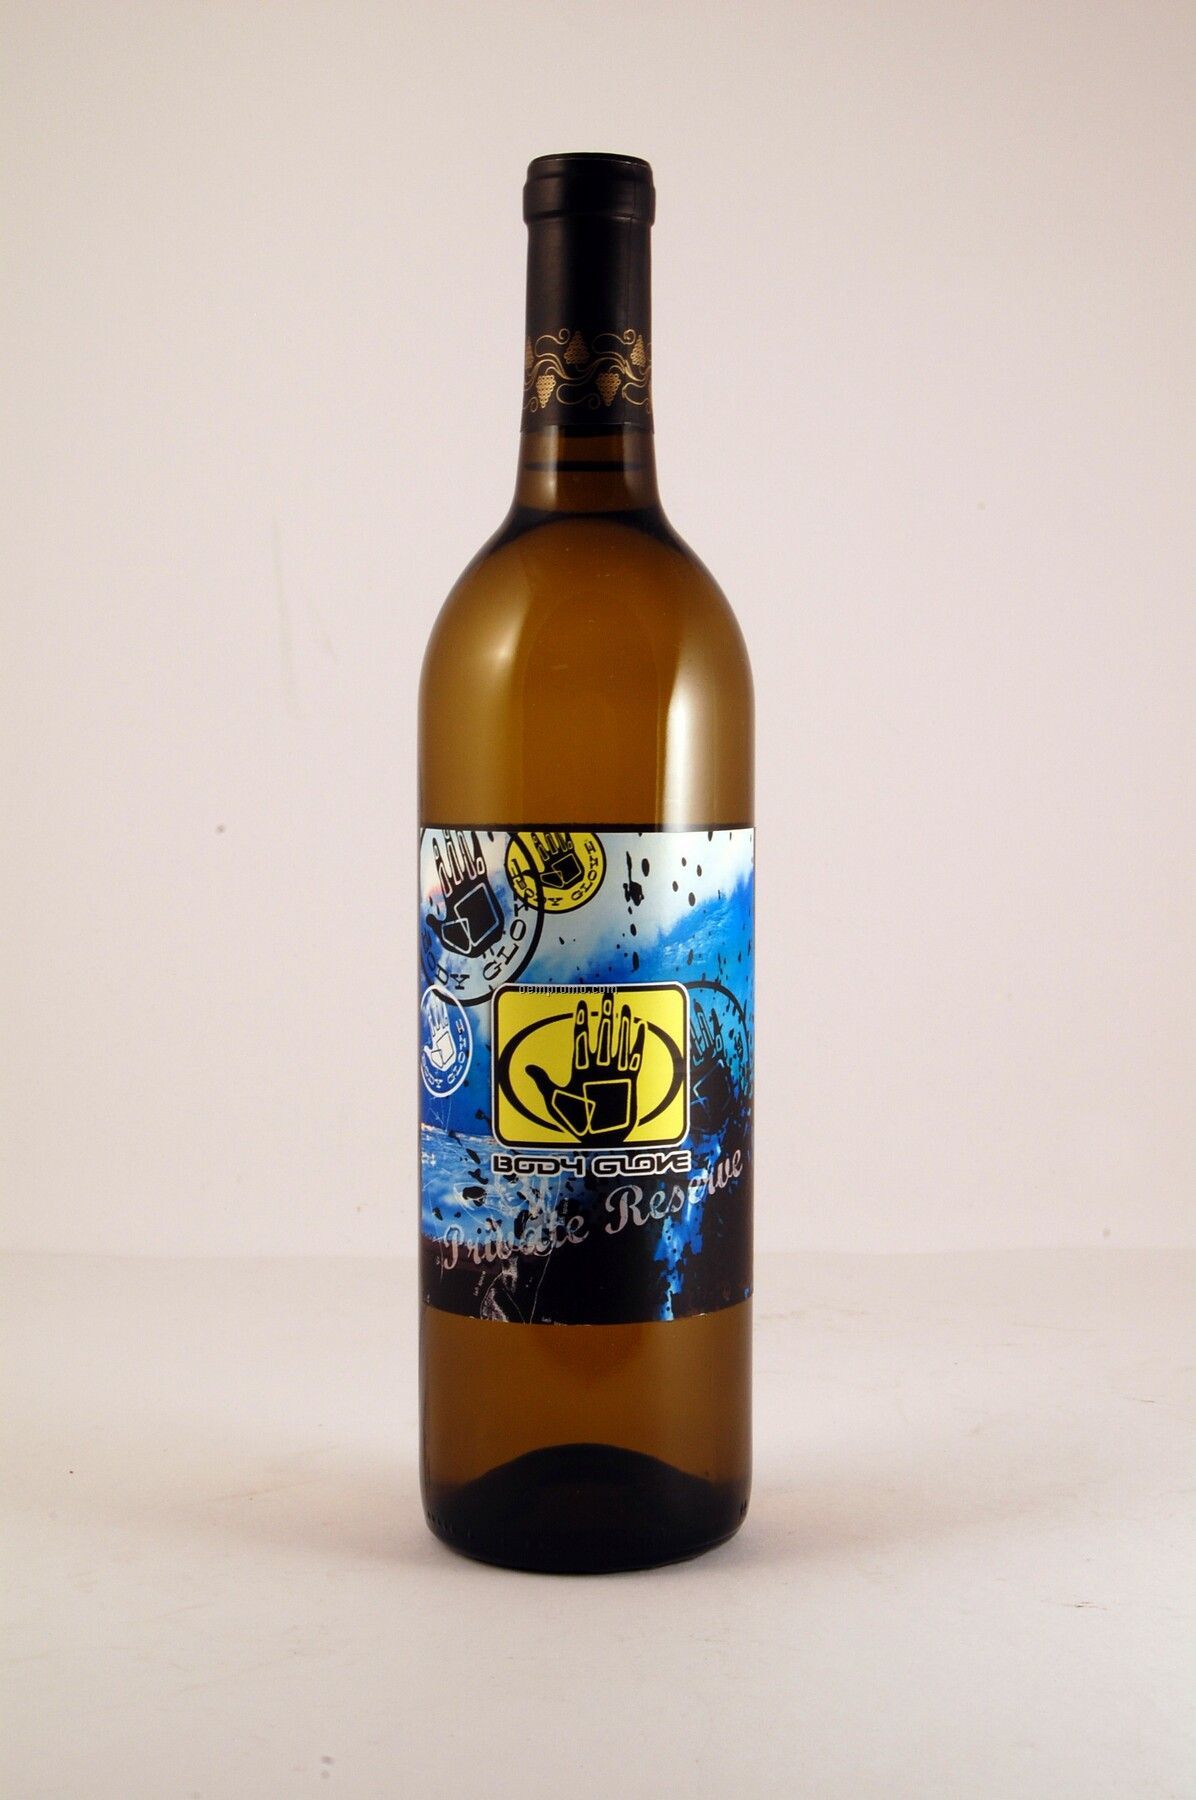 2009 Wv Riesling California Wine (Custom Labeled Wine)